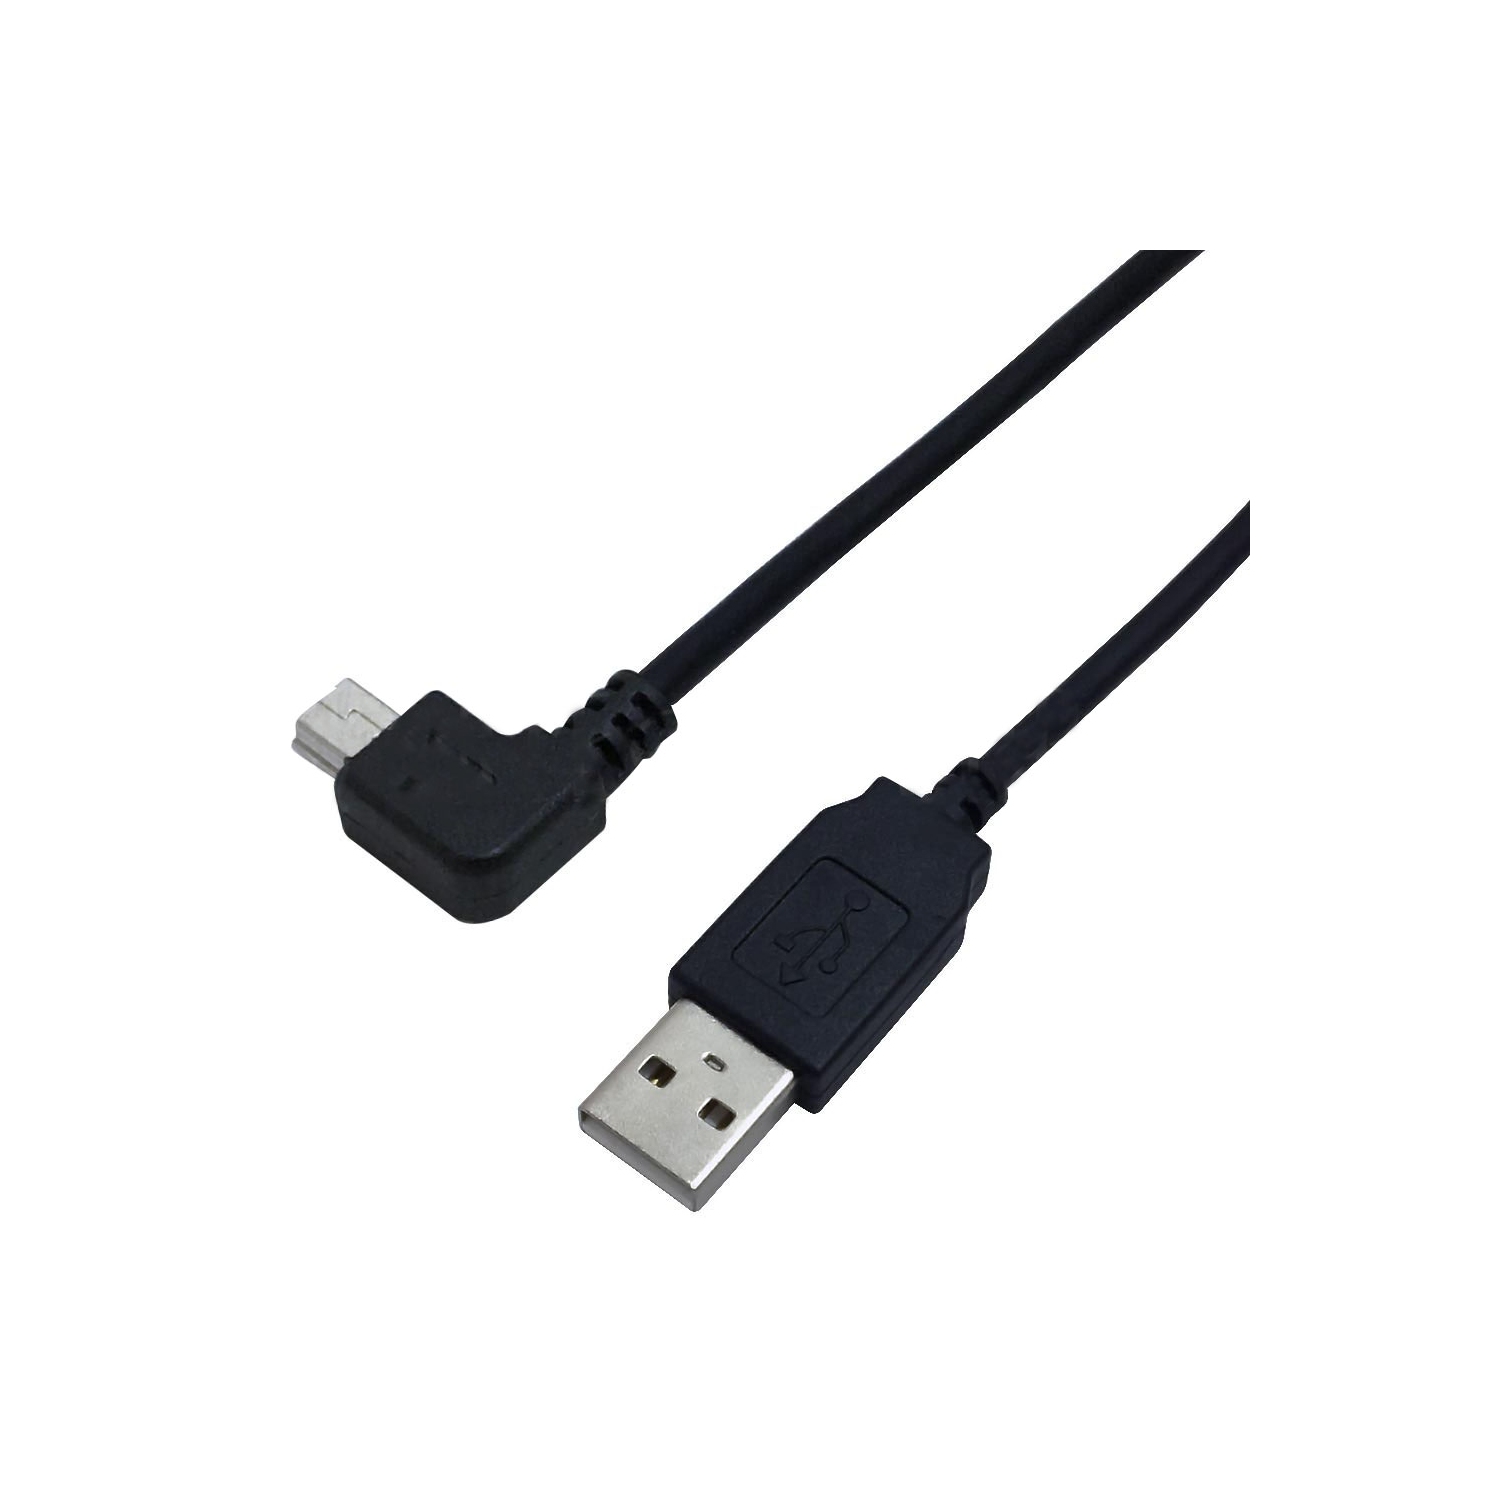 Free Shipping! HYFAI USB 2.0 A Straight Male to Mini-B 5-Pin Mini USB Left Angle Male Cable, 1 ft